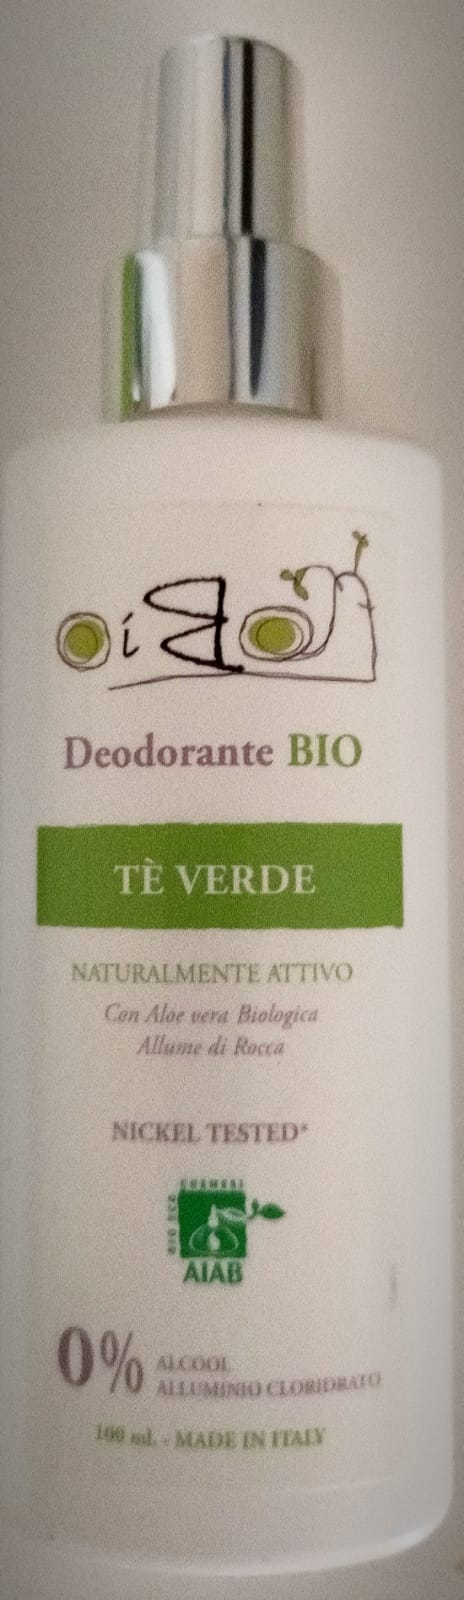 oibo-bio-profumeria_deodorante-spray_the-verde_oibo_zeca_labnat